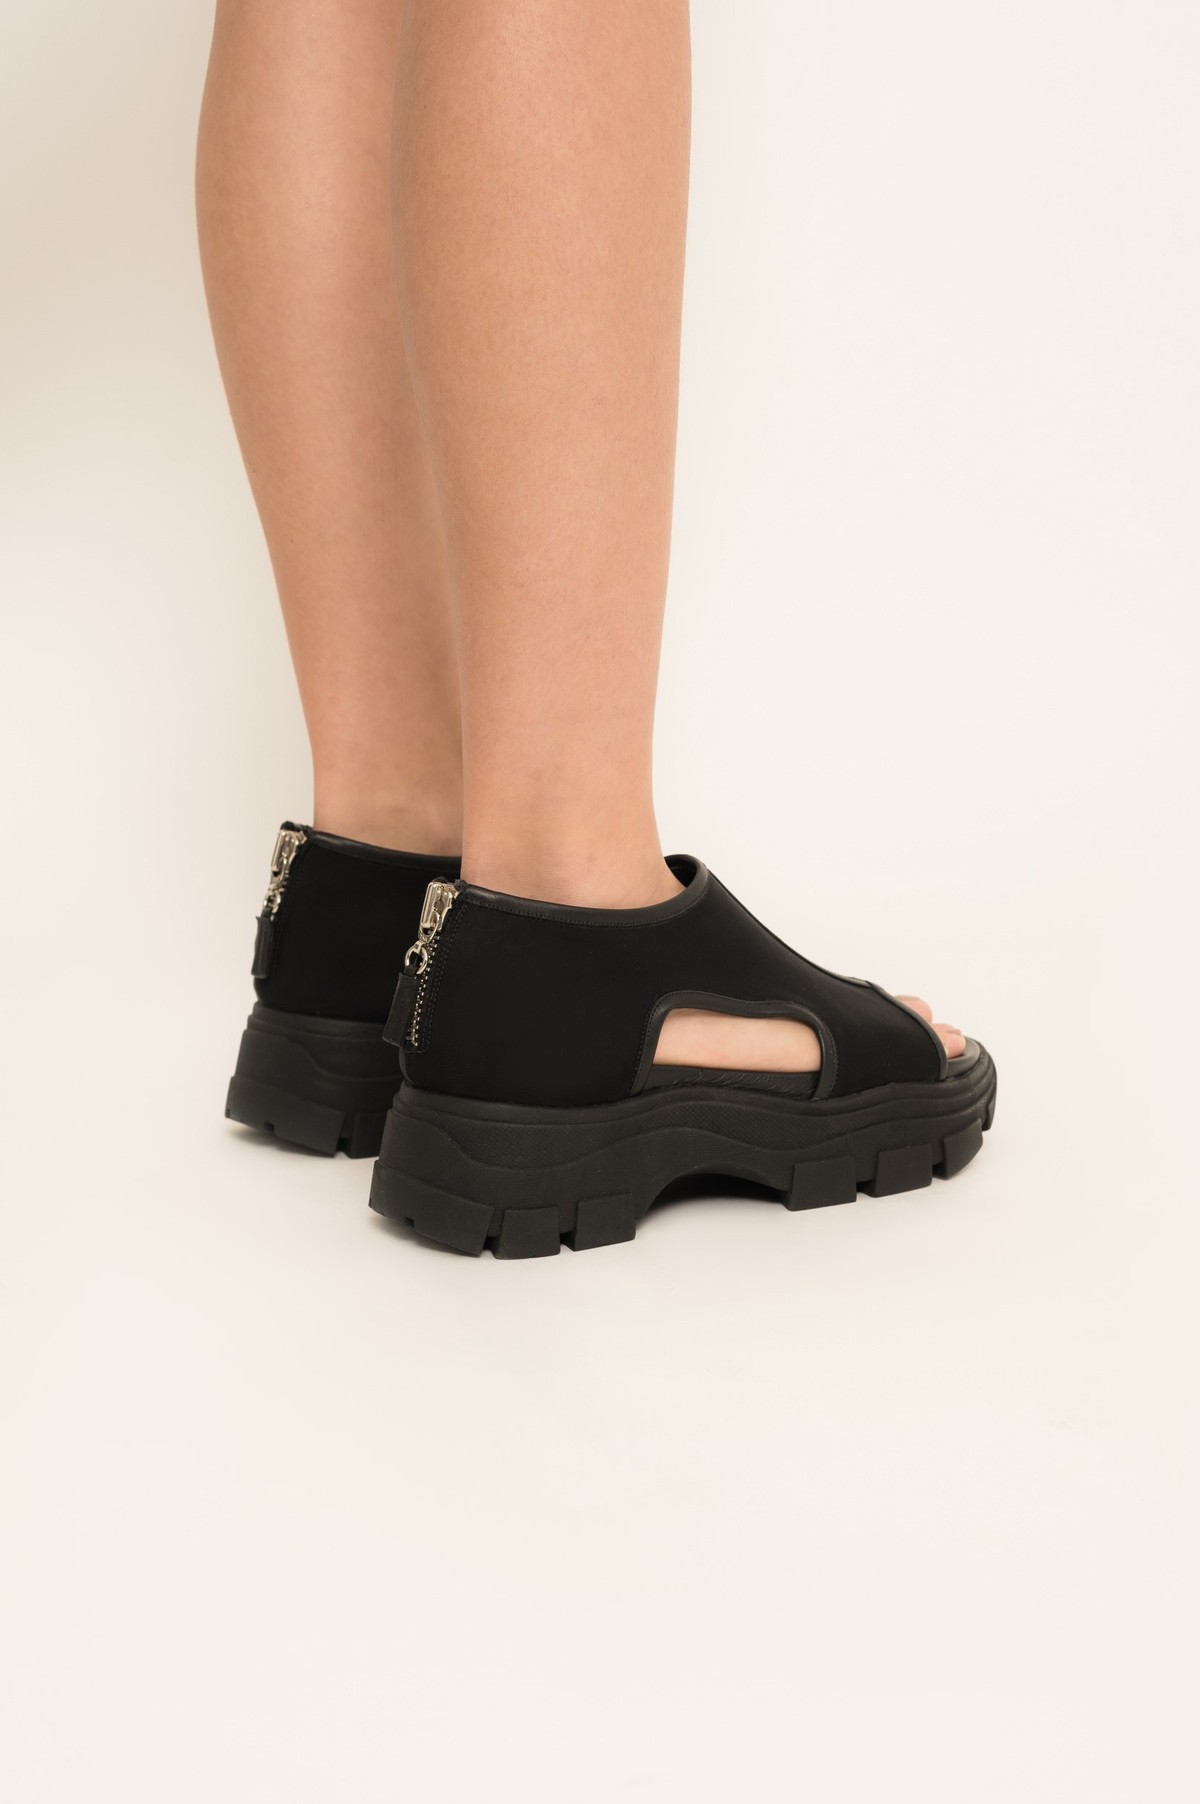 sandália com plataforma robusta em neoprene | neoprene robust sandals